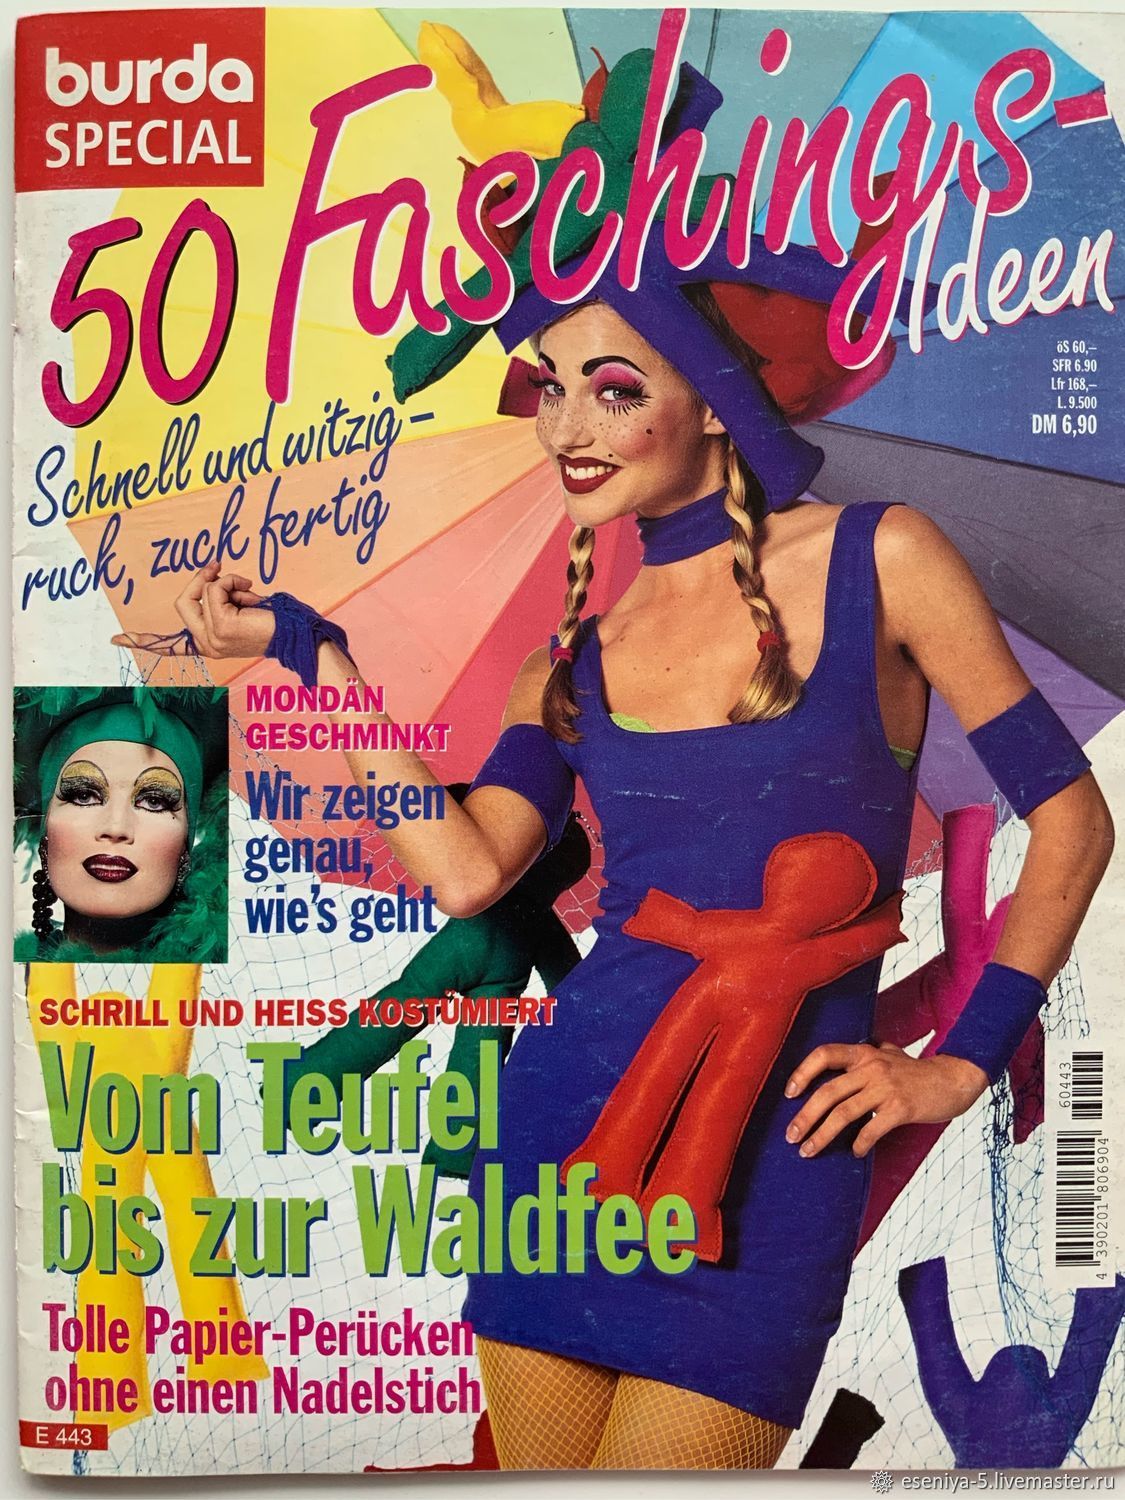 Burda Special Magazine - Carnival Fashion 1996 E 443, Magazines, Moscow,  Фото №1